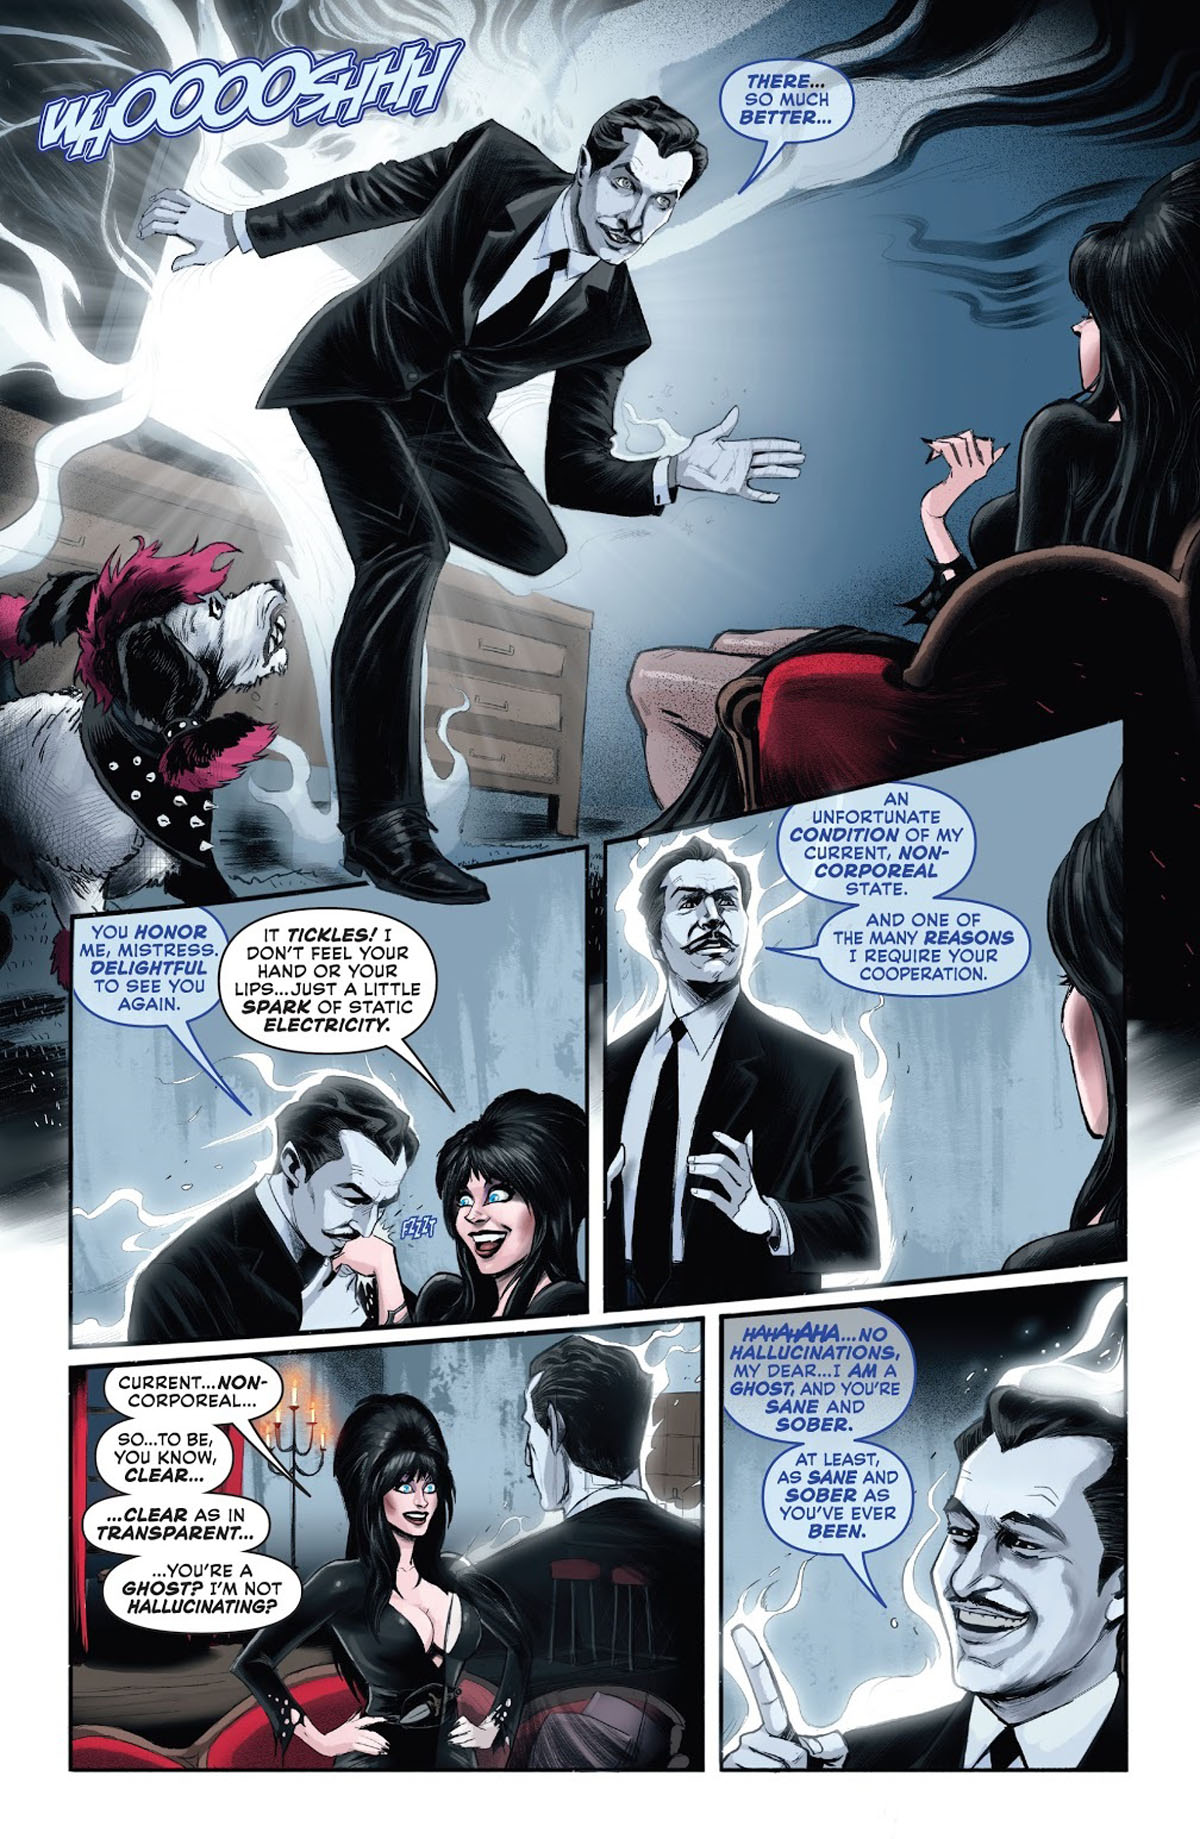 Elvira Meets Vincent Price #1 page 12 by Juan Samu